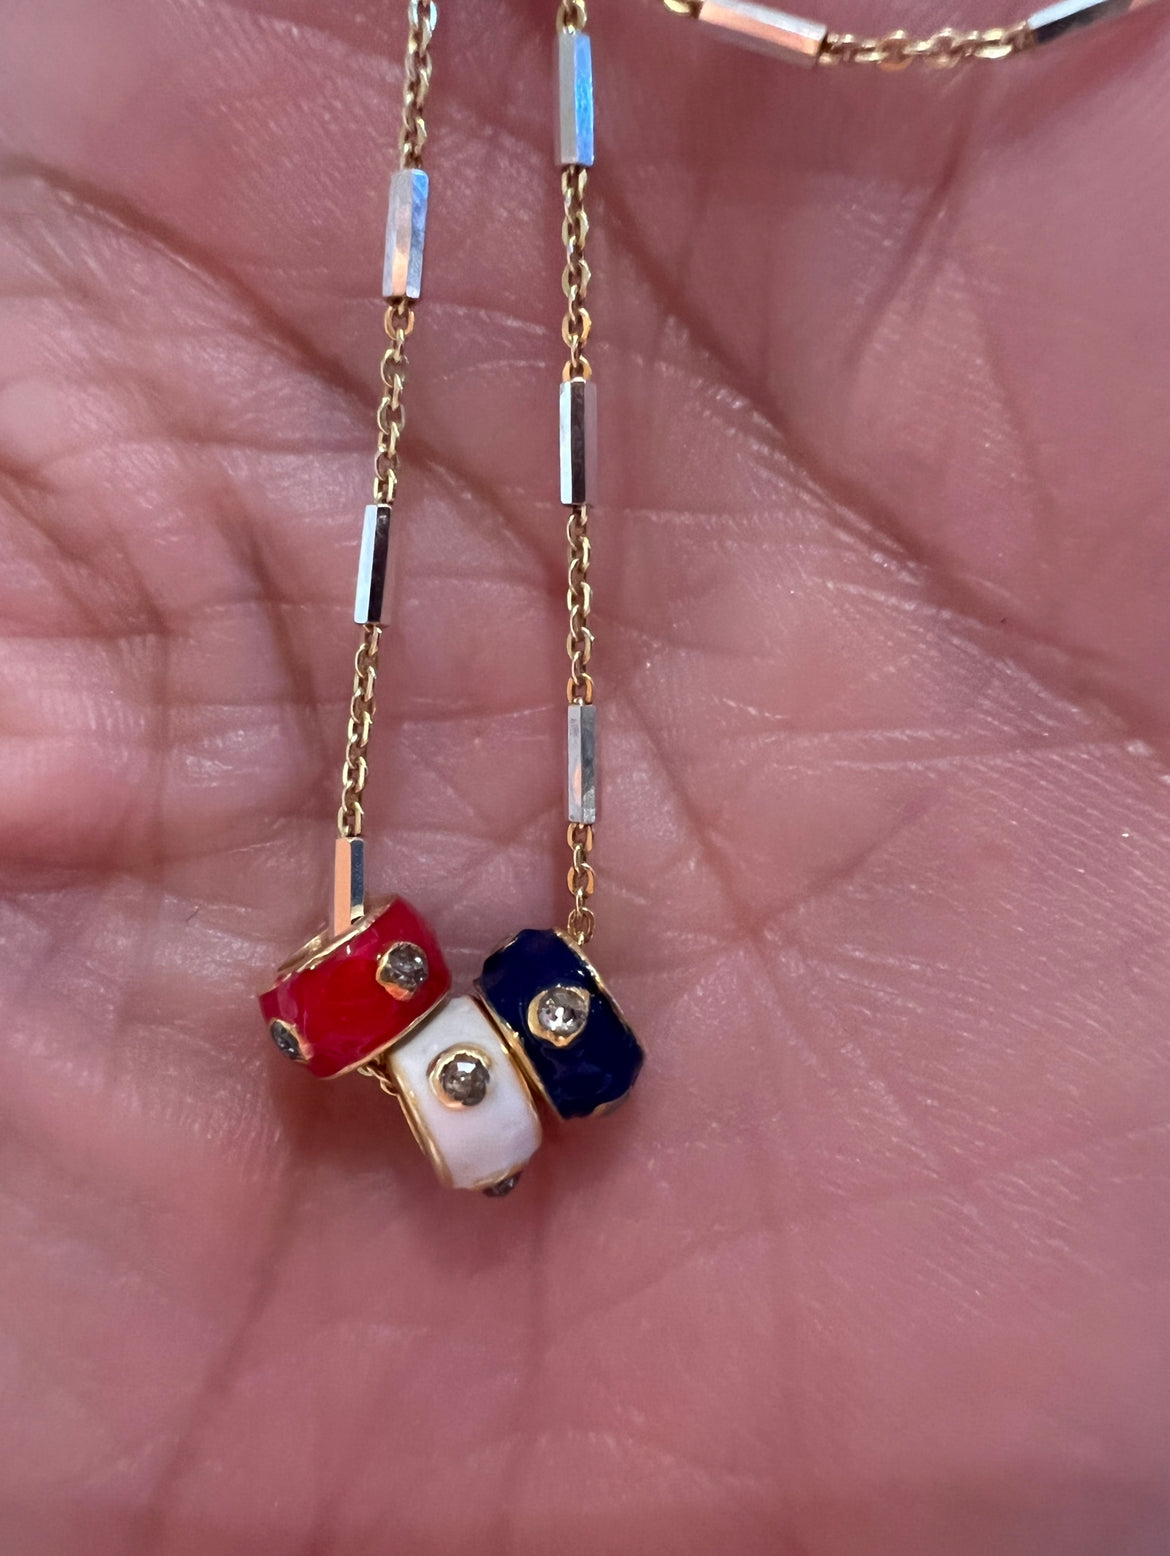 Diamond Enamel Bead Bracelets/Necklace